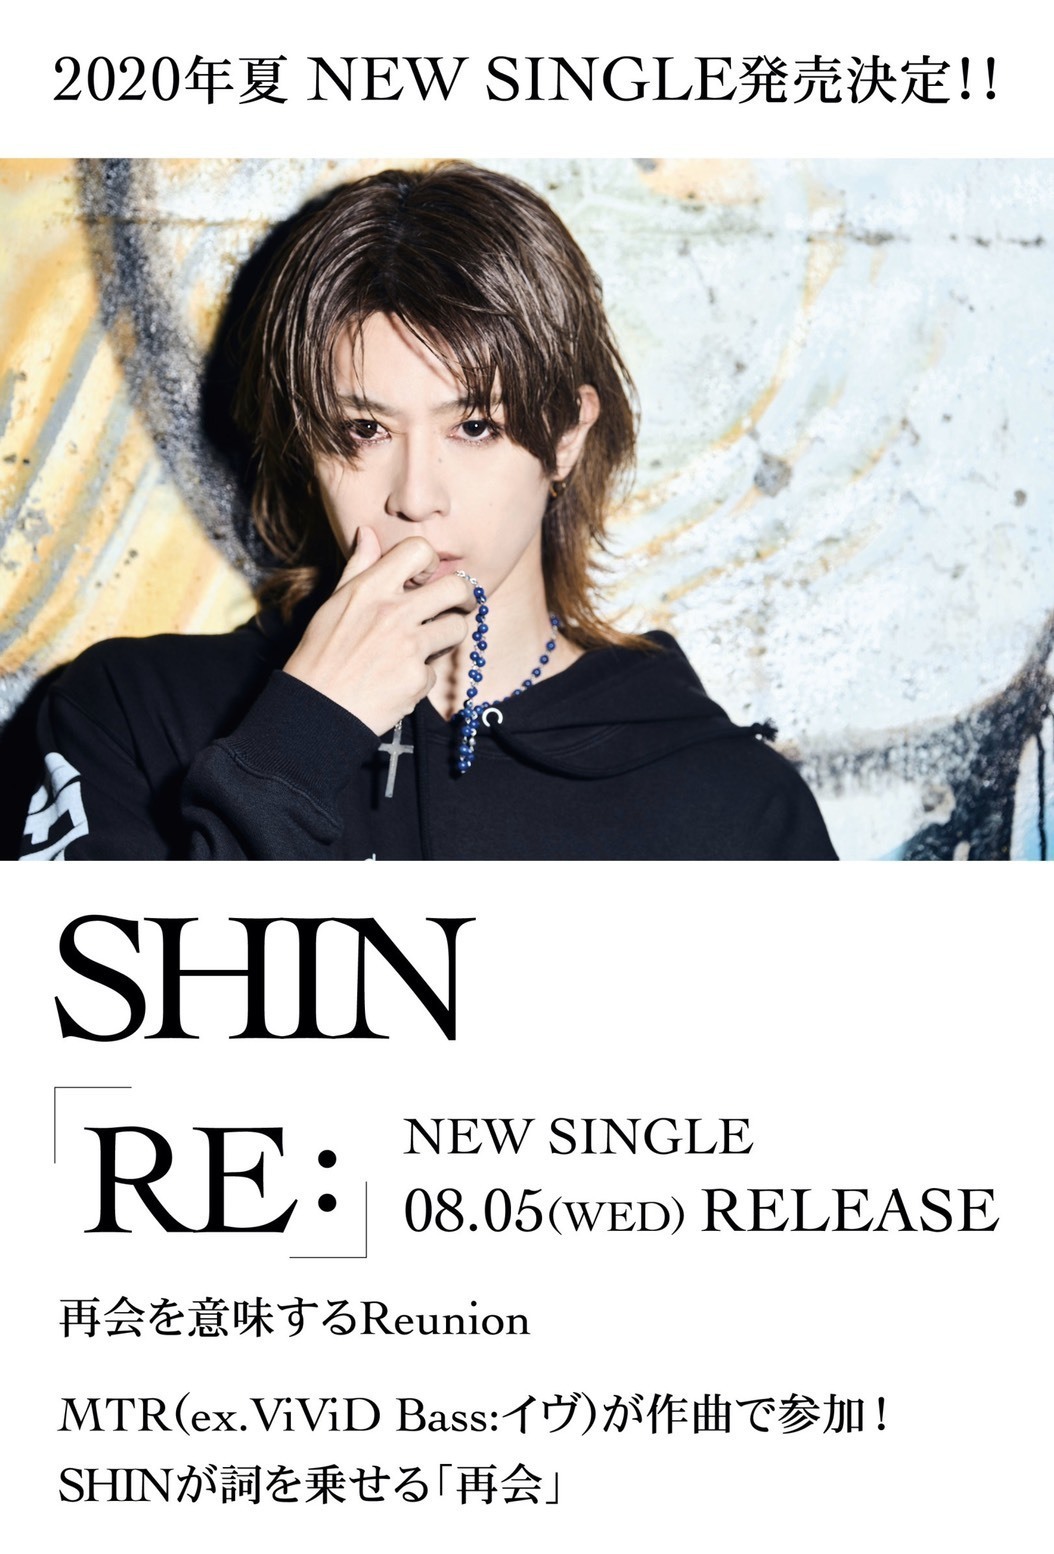 [CD]2020年8月5日(水)1st SINGLE「RE:」発売 ※情報追記(6/17更新) | SHIN OFFICIAL WEBSITE